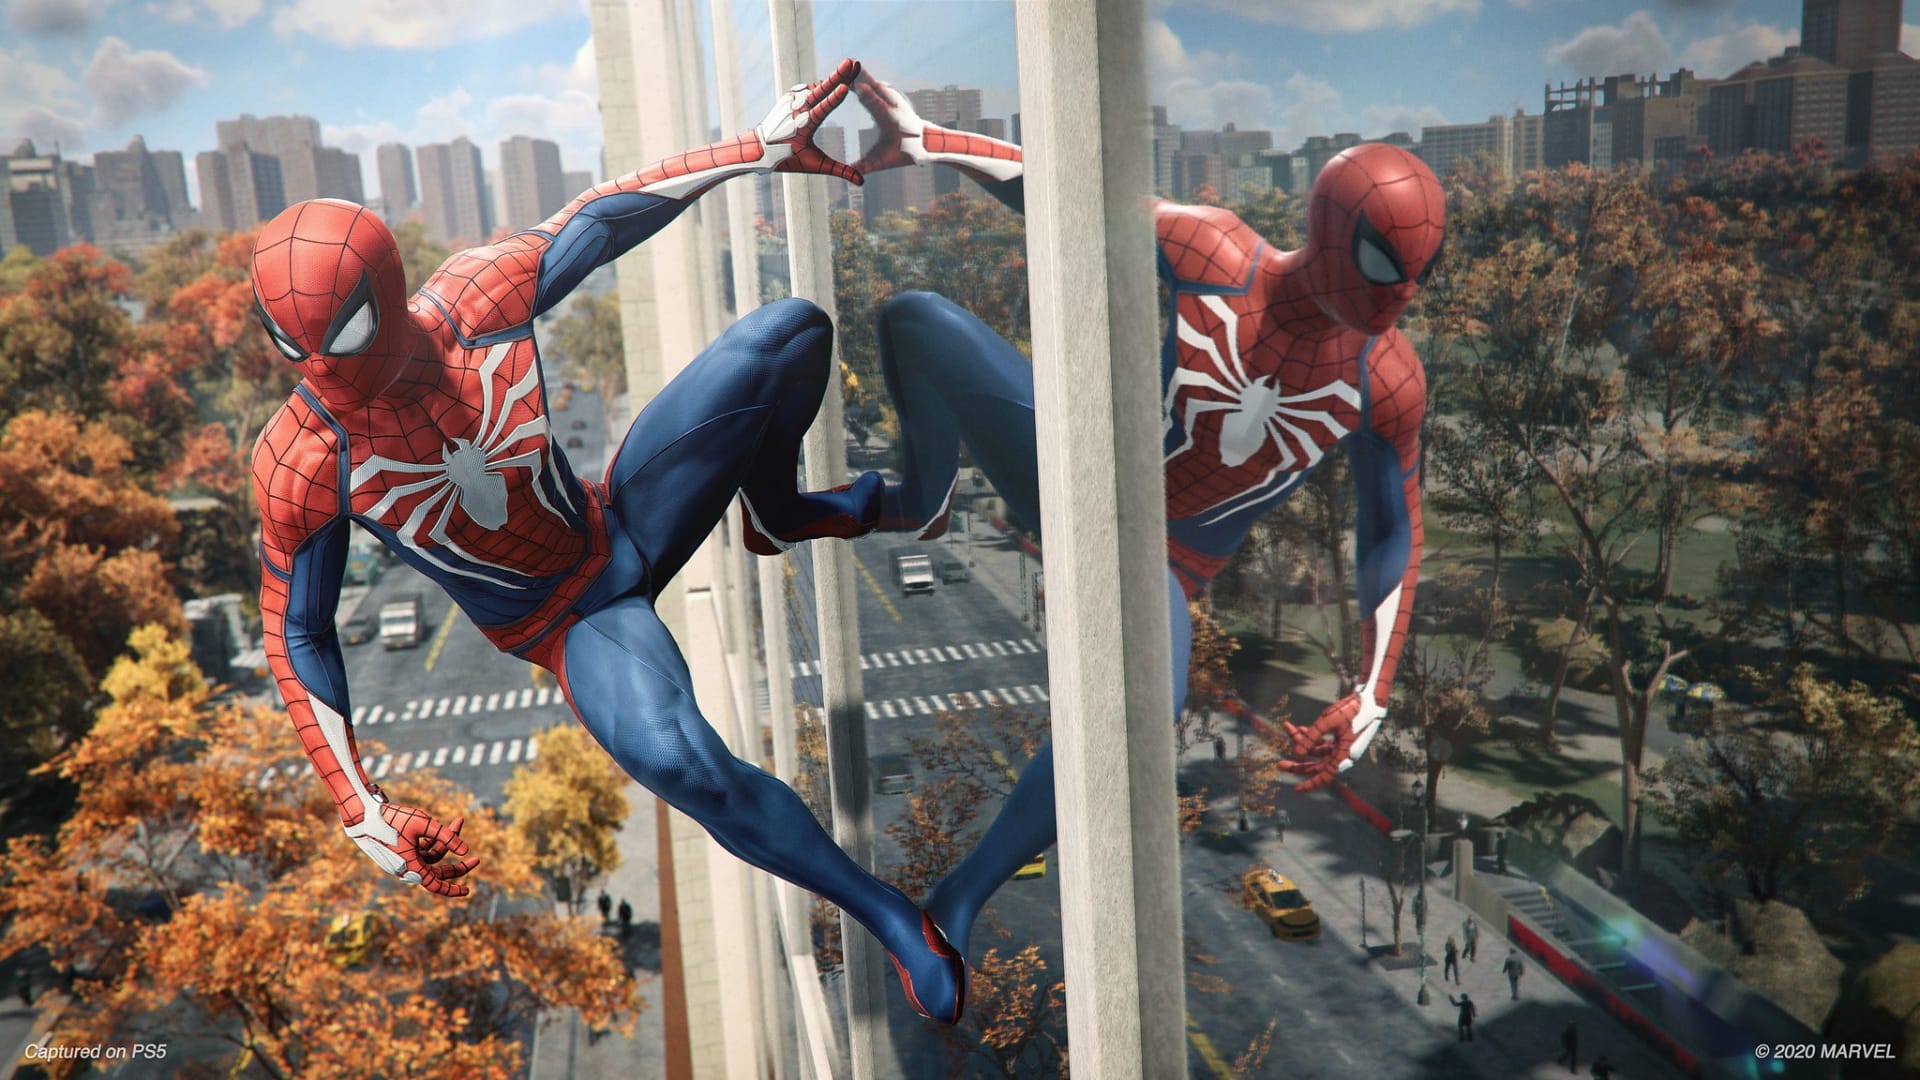 Marvel's Spider-Man Remastered, spider-man hanging onto a building